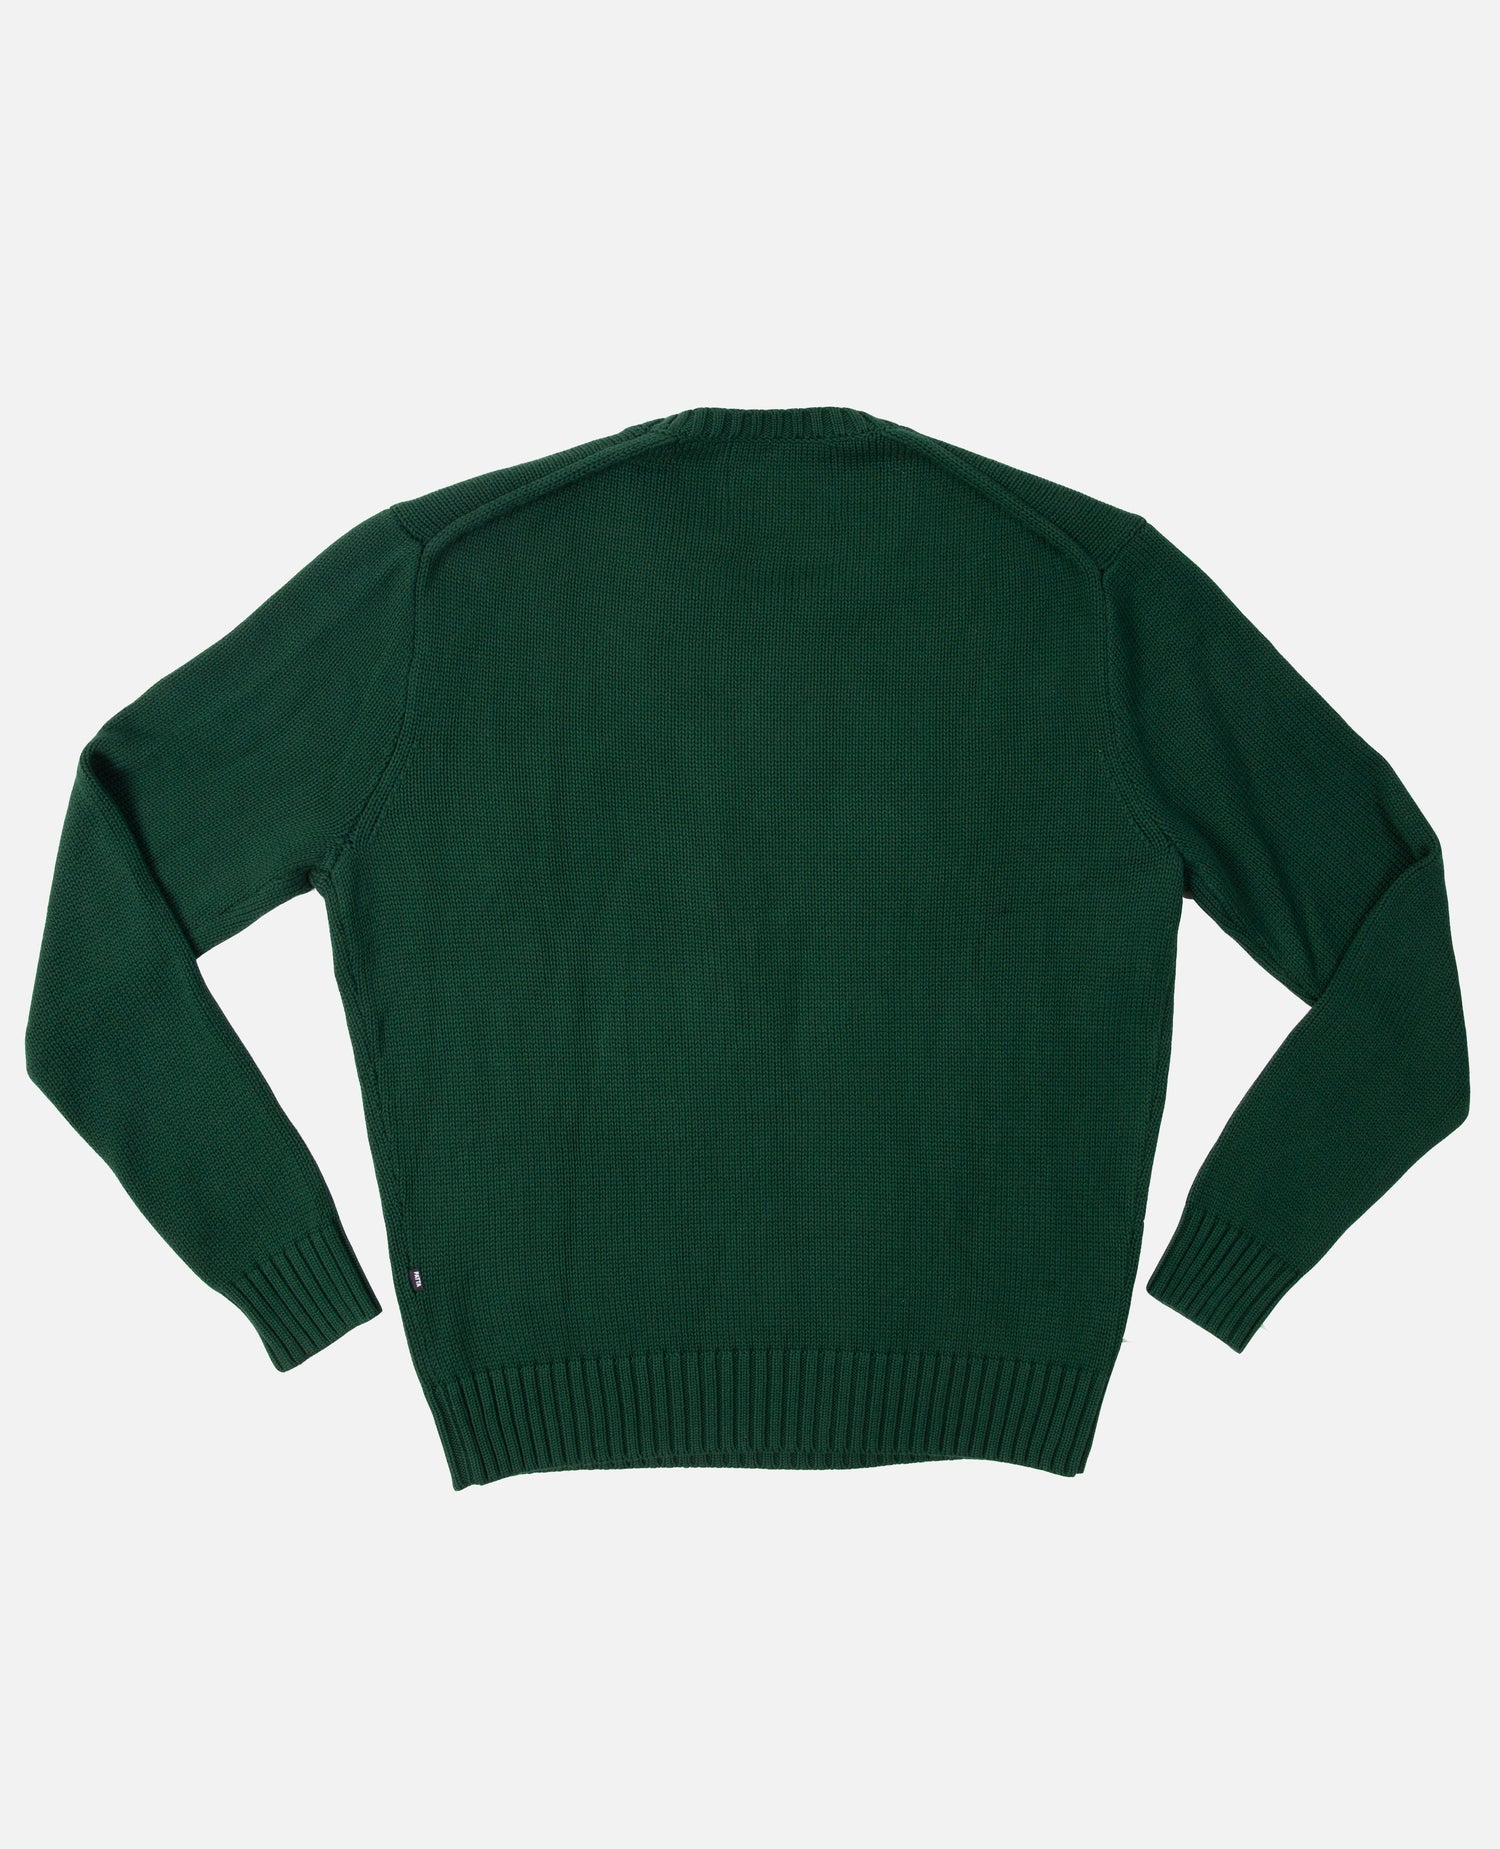 Patta University Knitted Sweater (Mountain View)